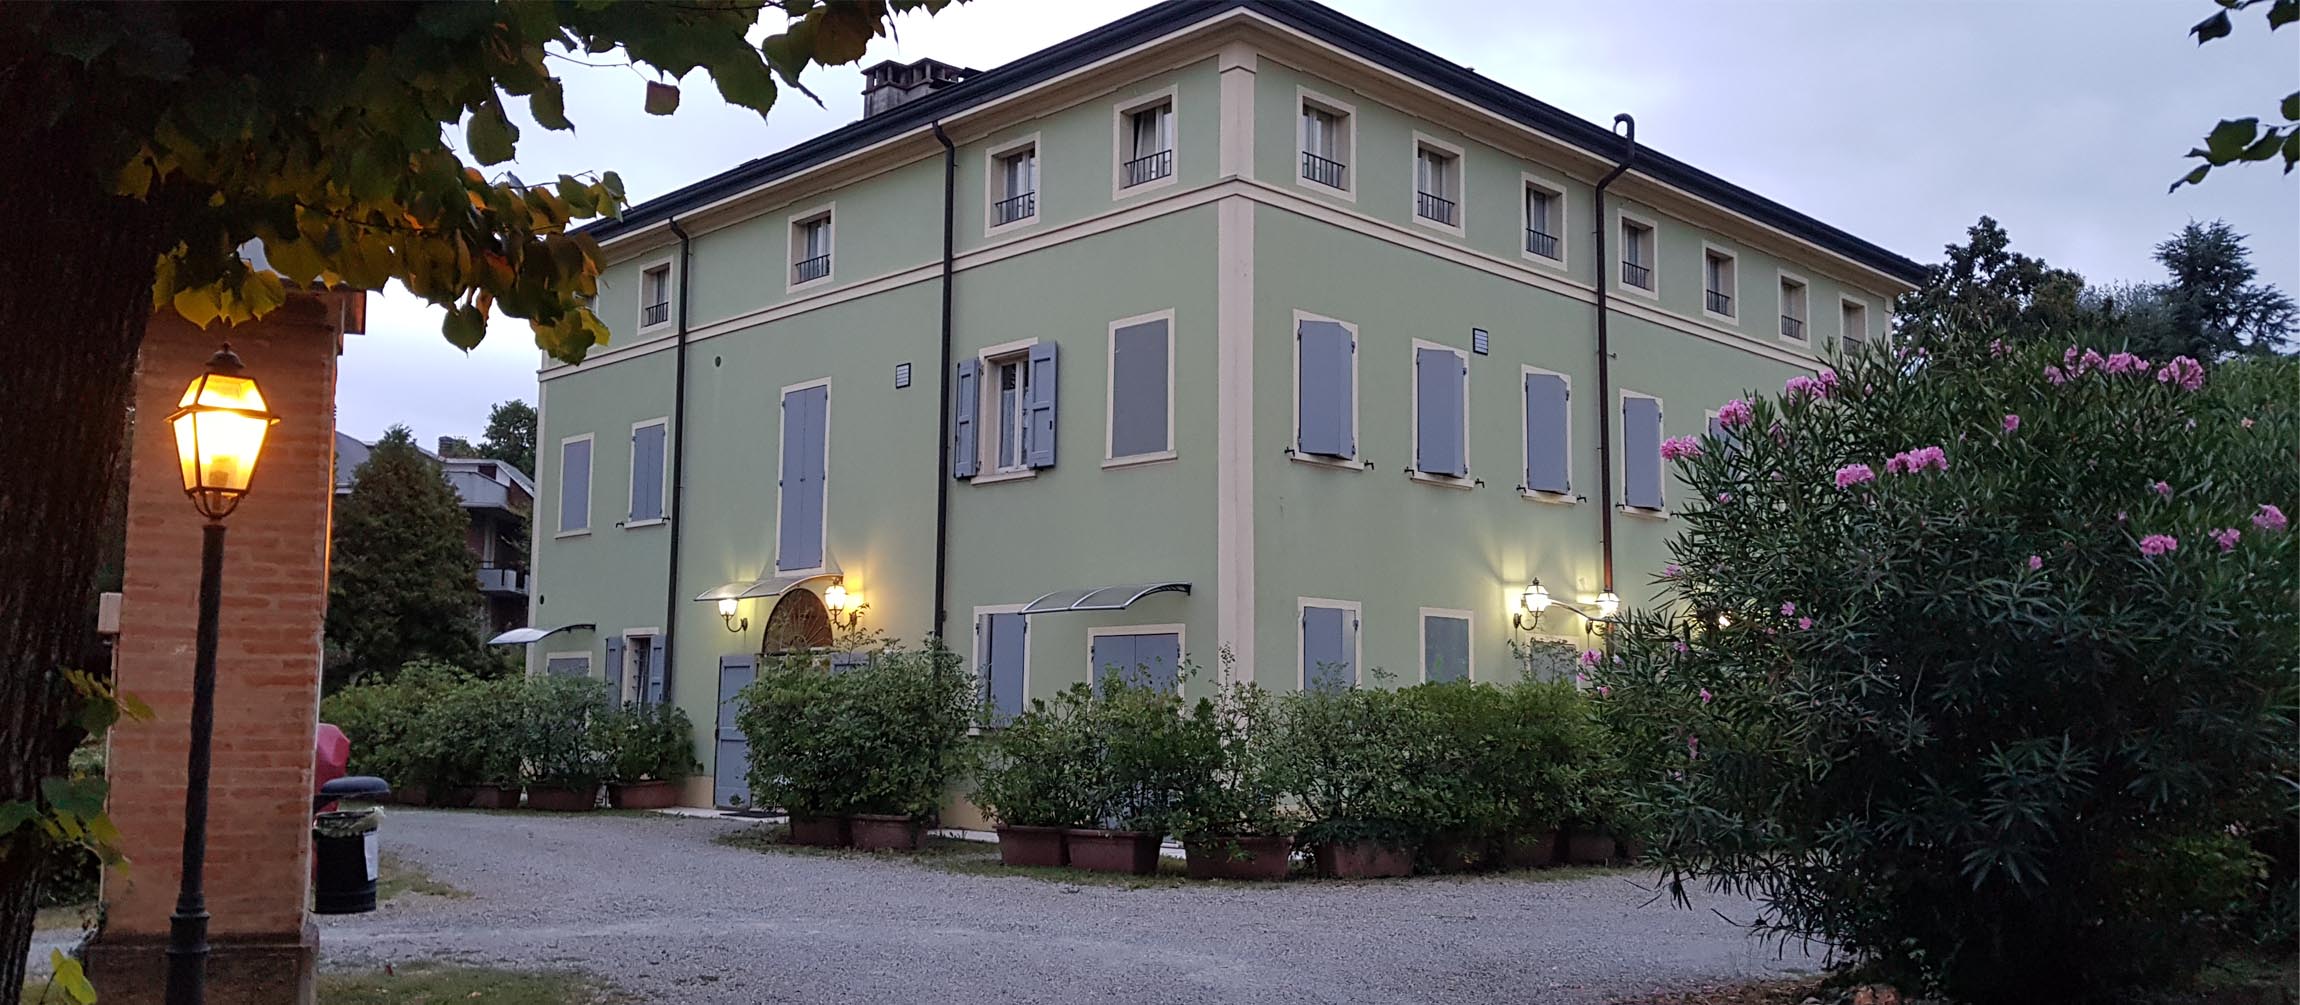 Villa Stufler Residence a Modena